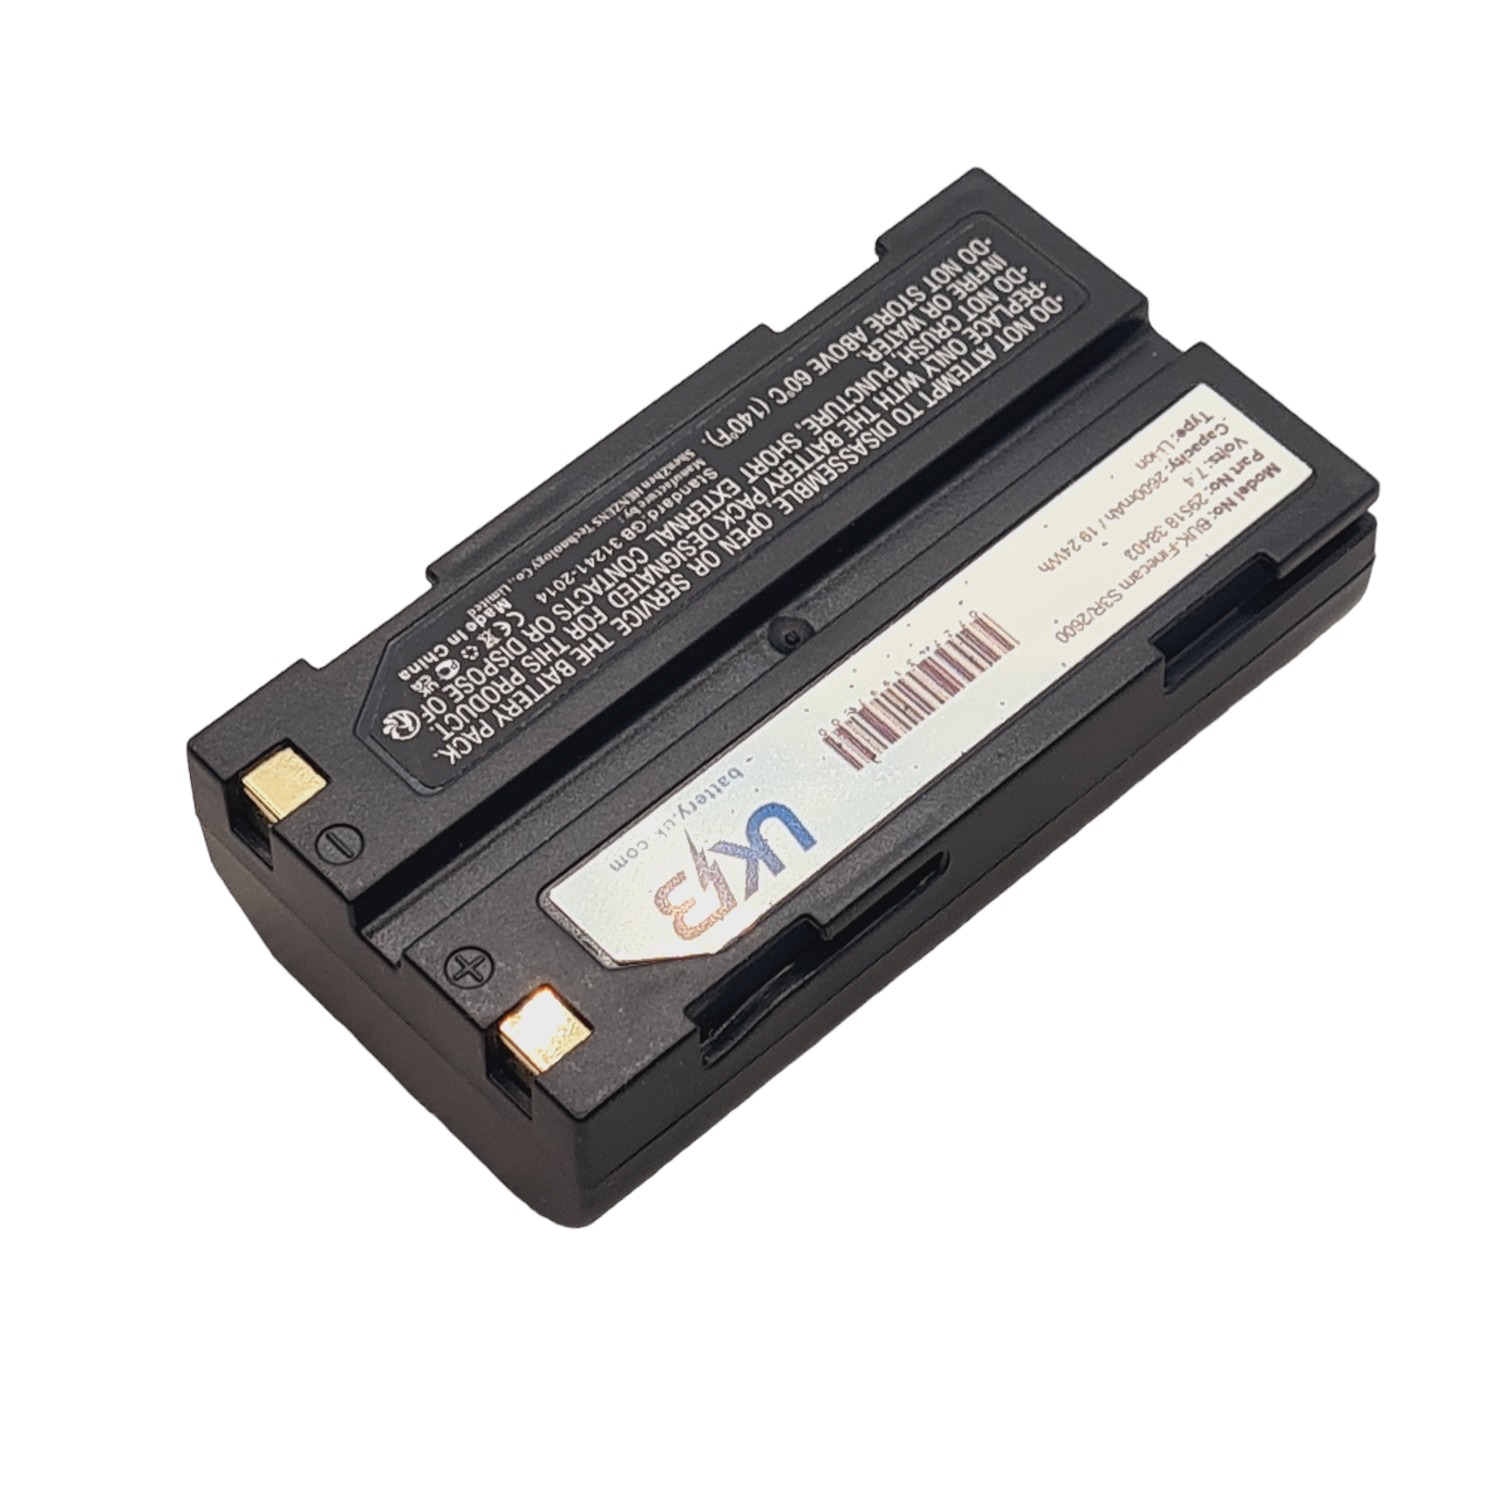 SURVEY 38403 Compatible Replacement Battery